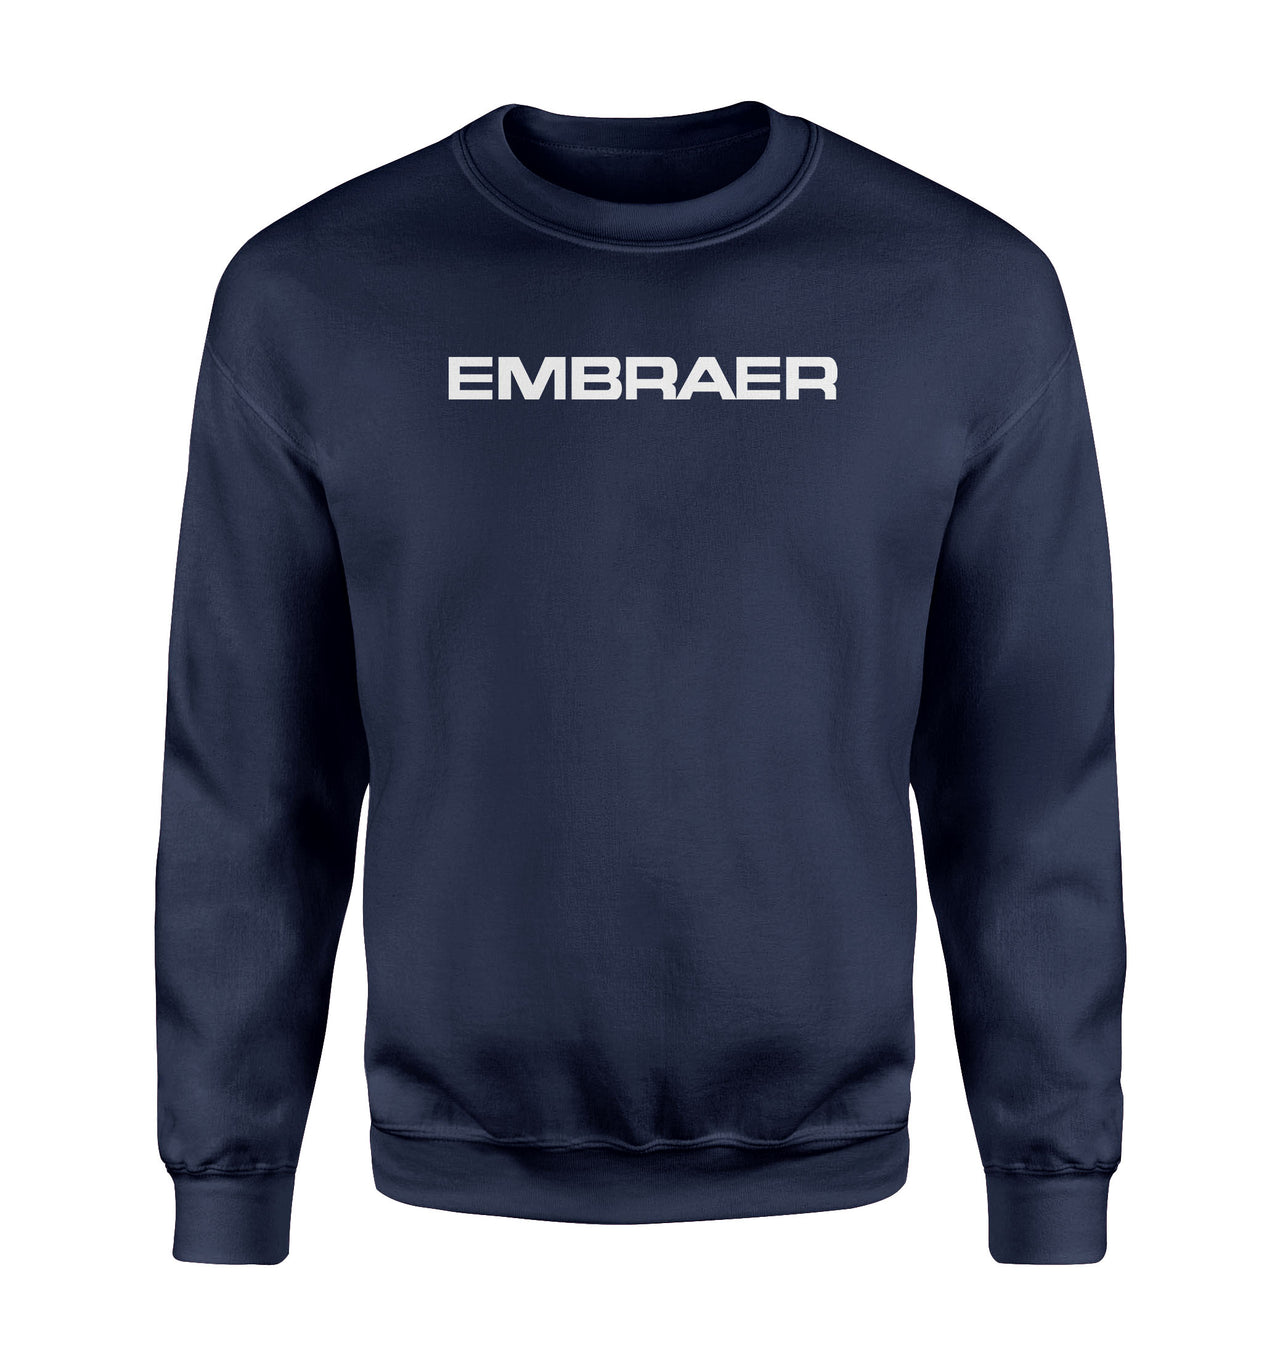 Embraer & Text Designed Sweatshirts